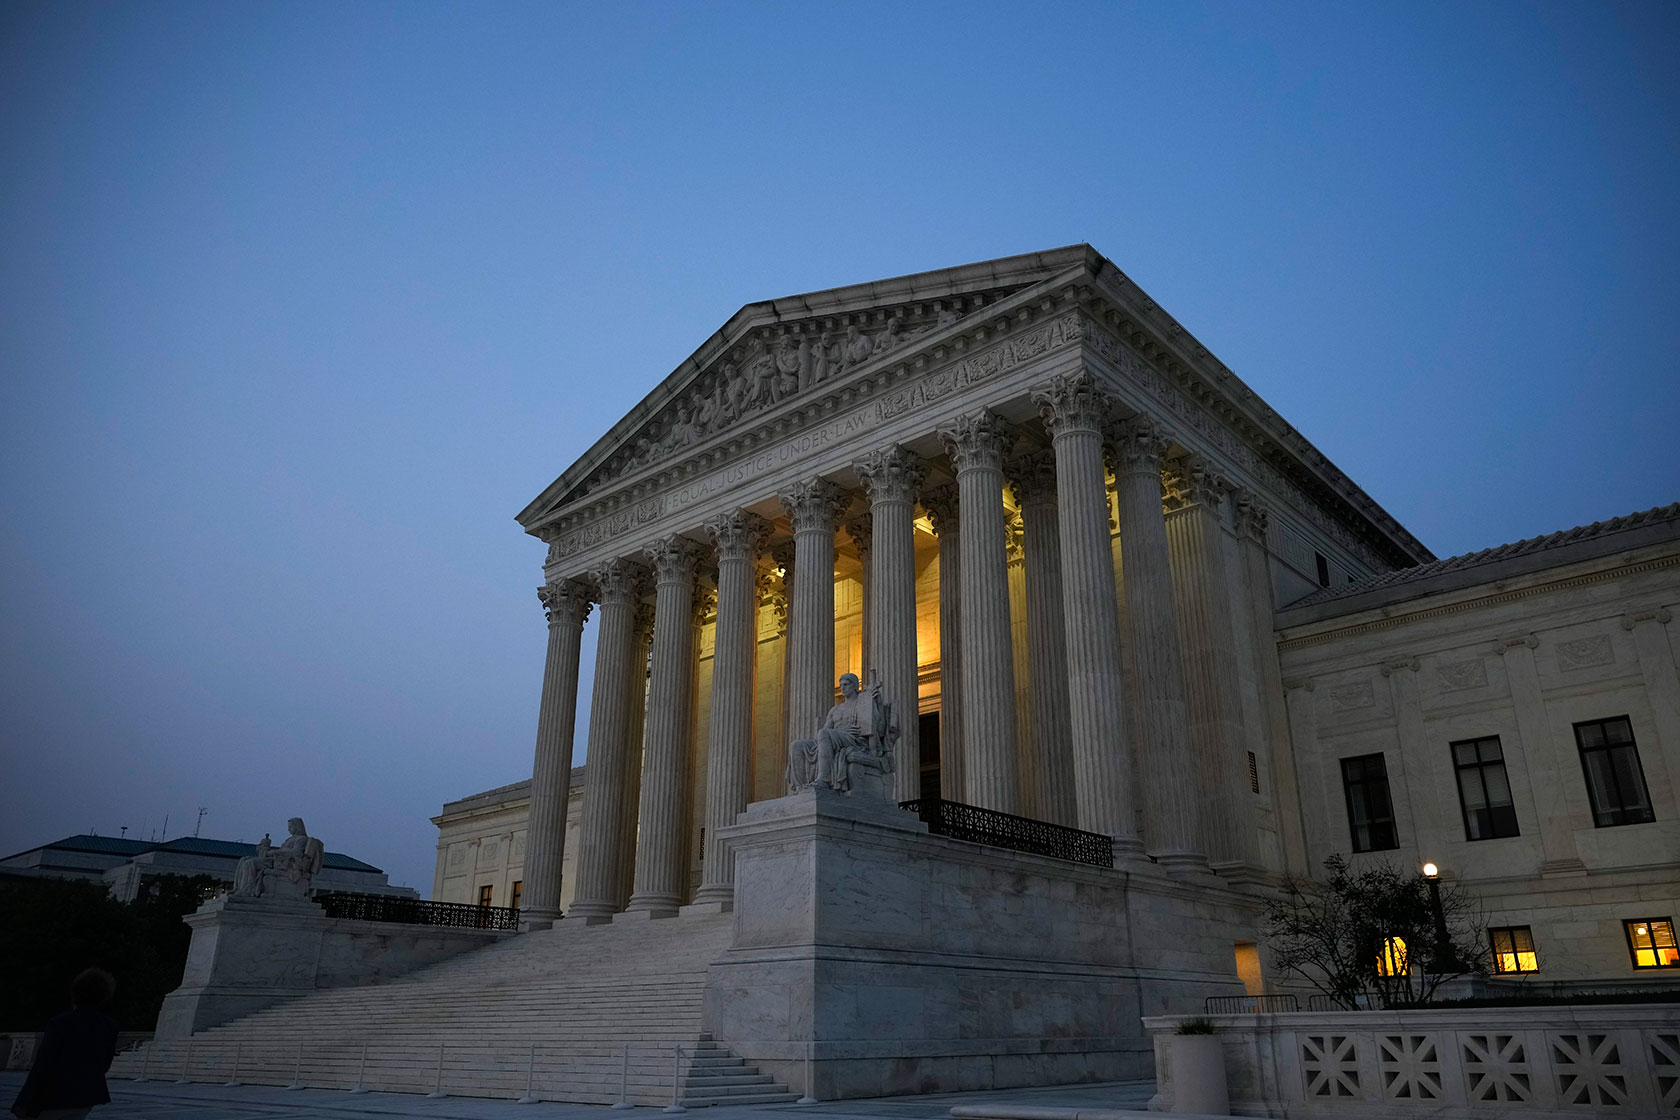 Photo shows a Supreme Court building partly lit inside, against a dark blue sky